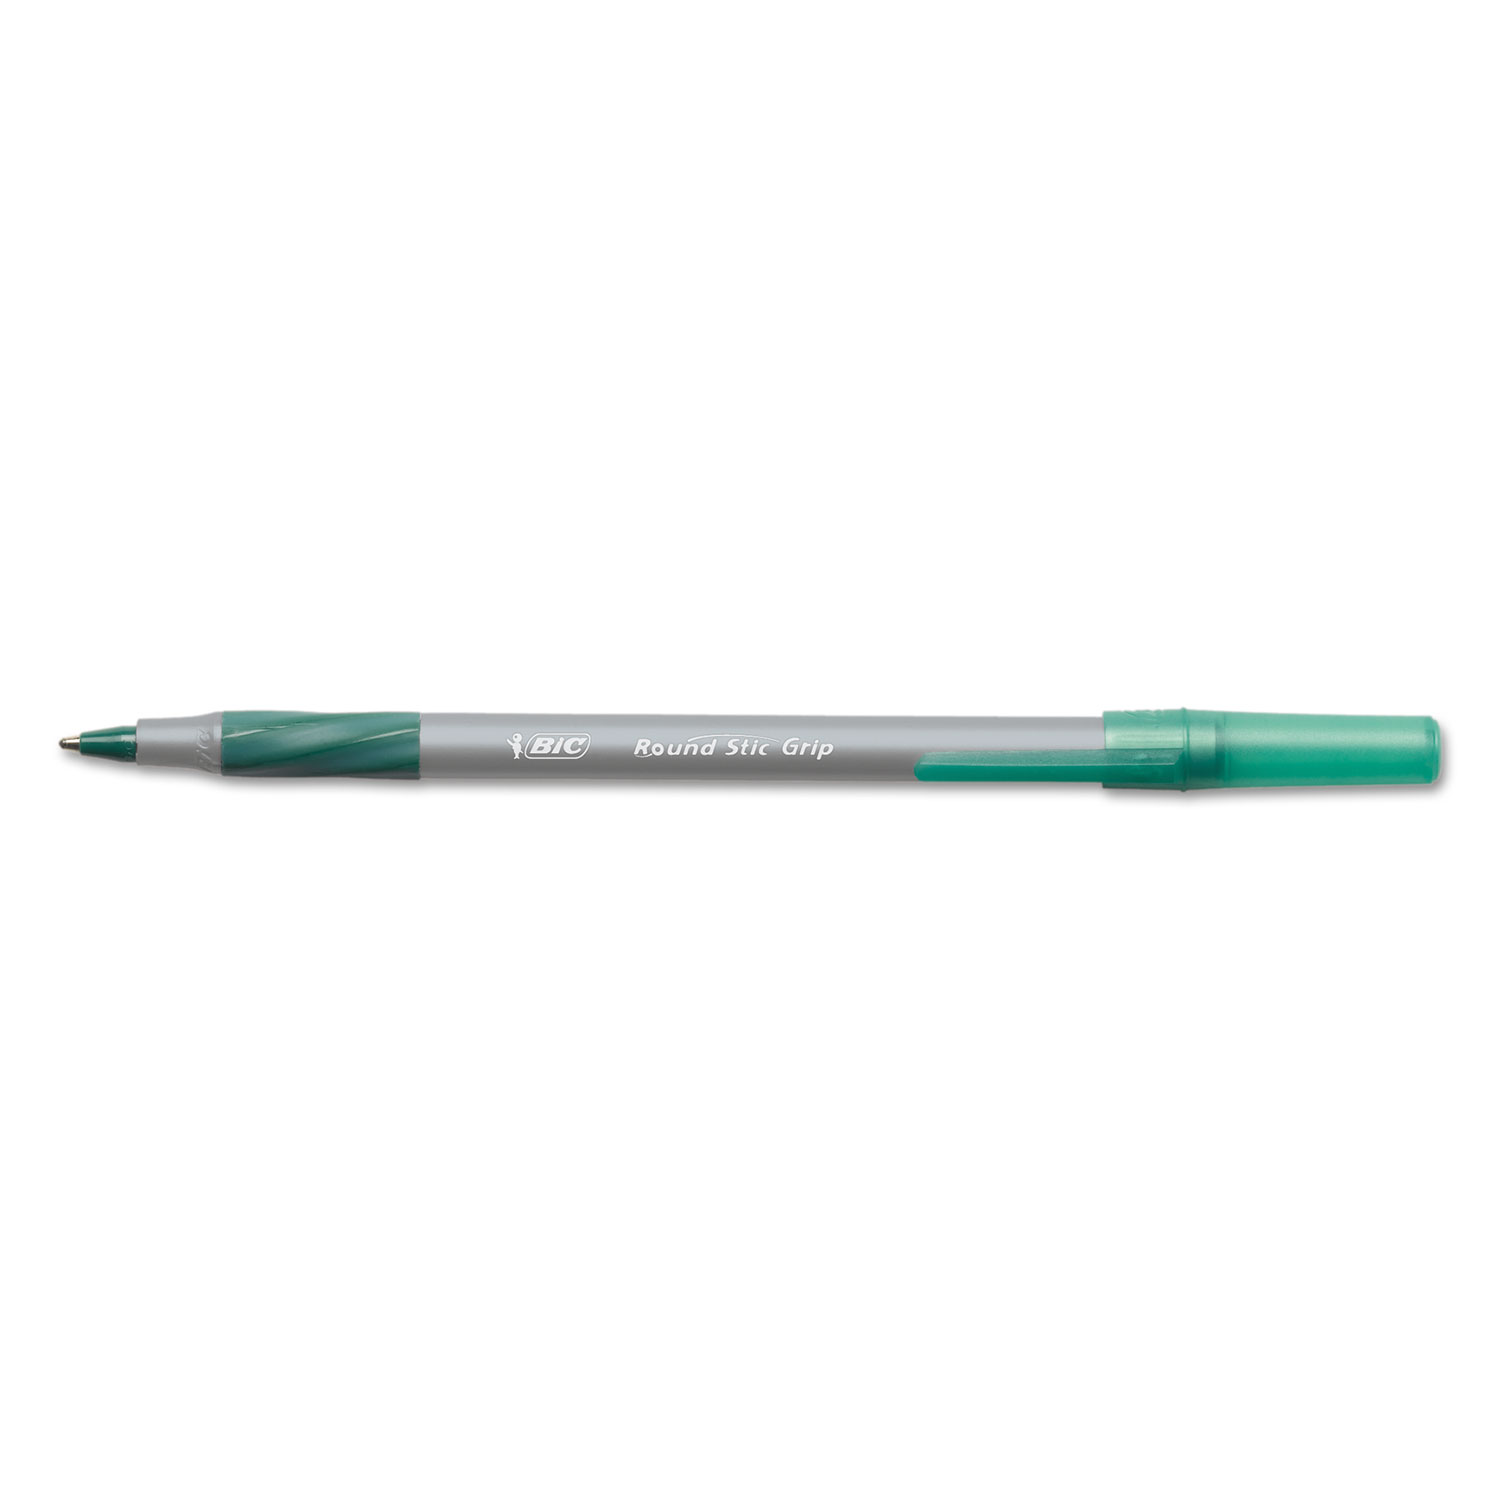 Round Stic Grip Xtra Comfort Ballpoint Pen, Easy-Glide, Stick, Medium 1.2  mm, Blue Ink, Gray/Blue Barrel, Dozen